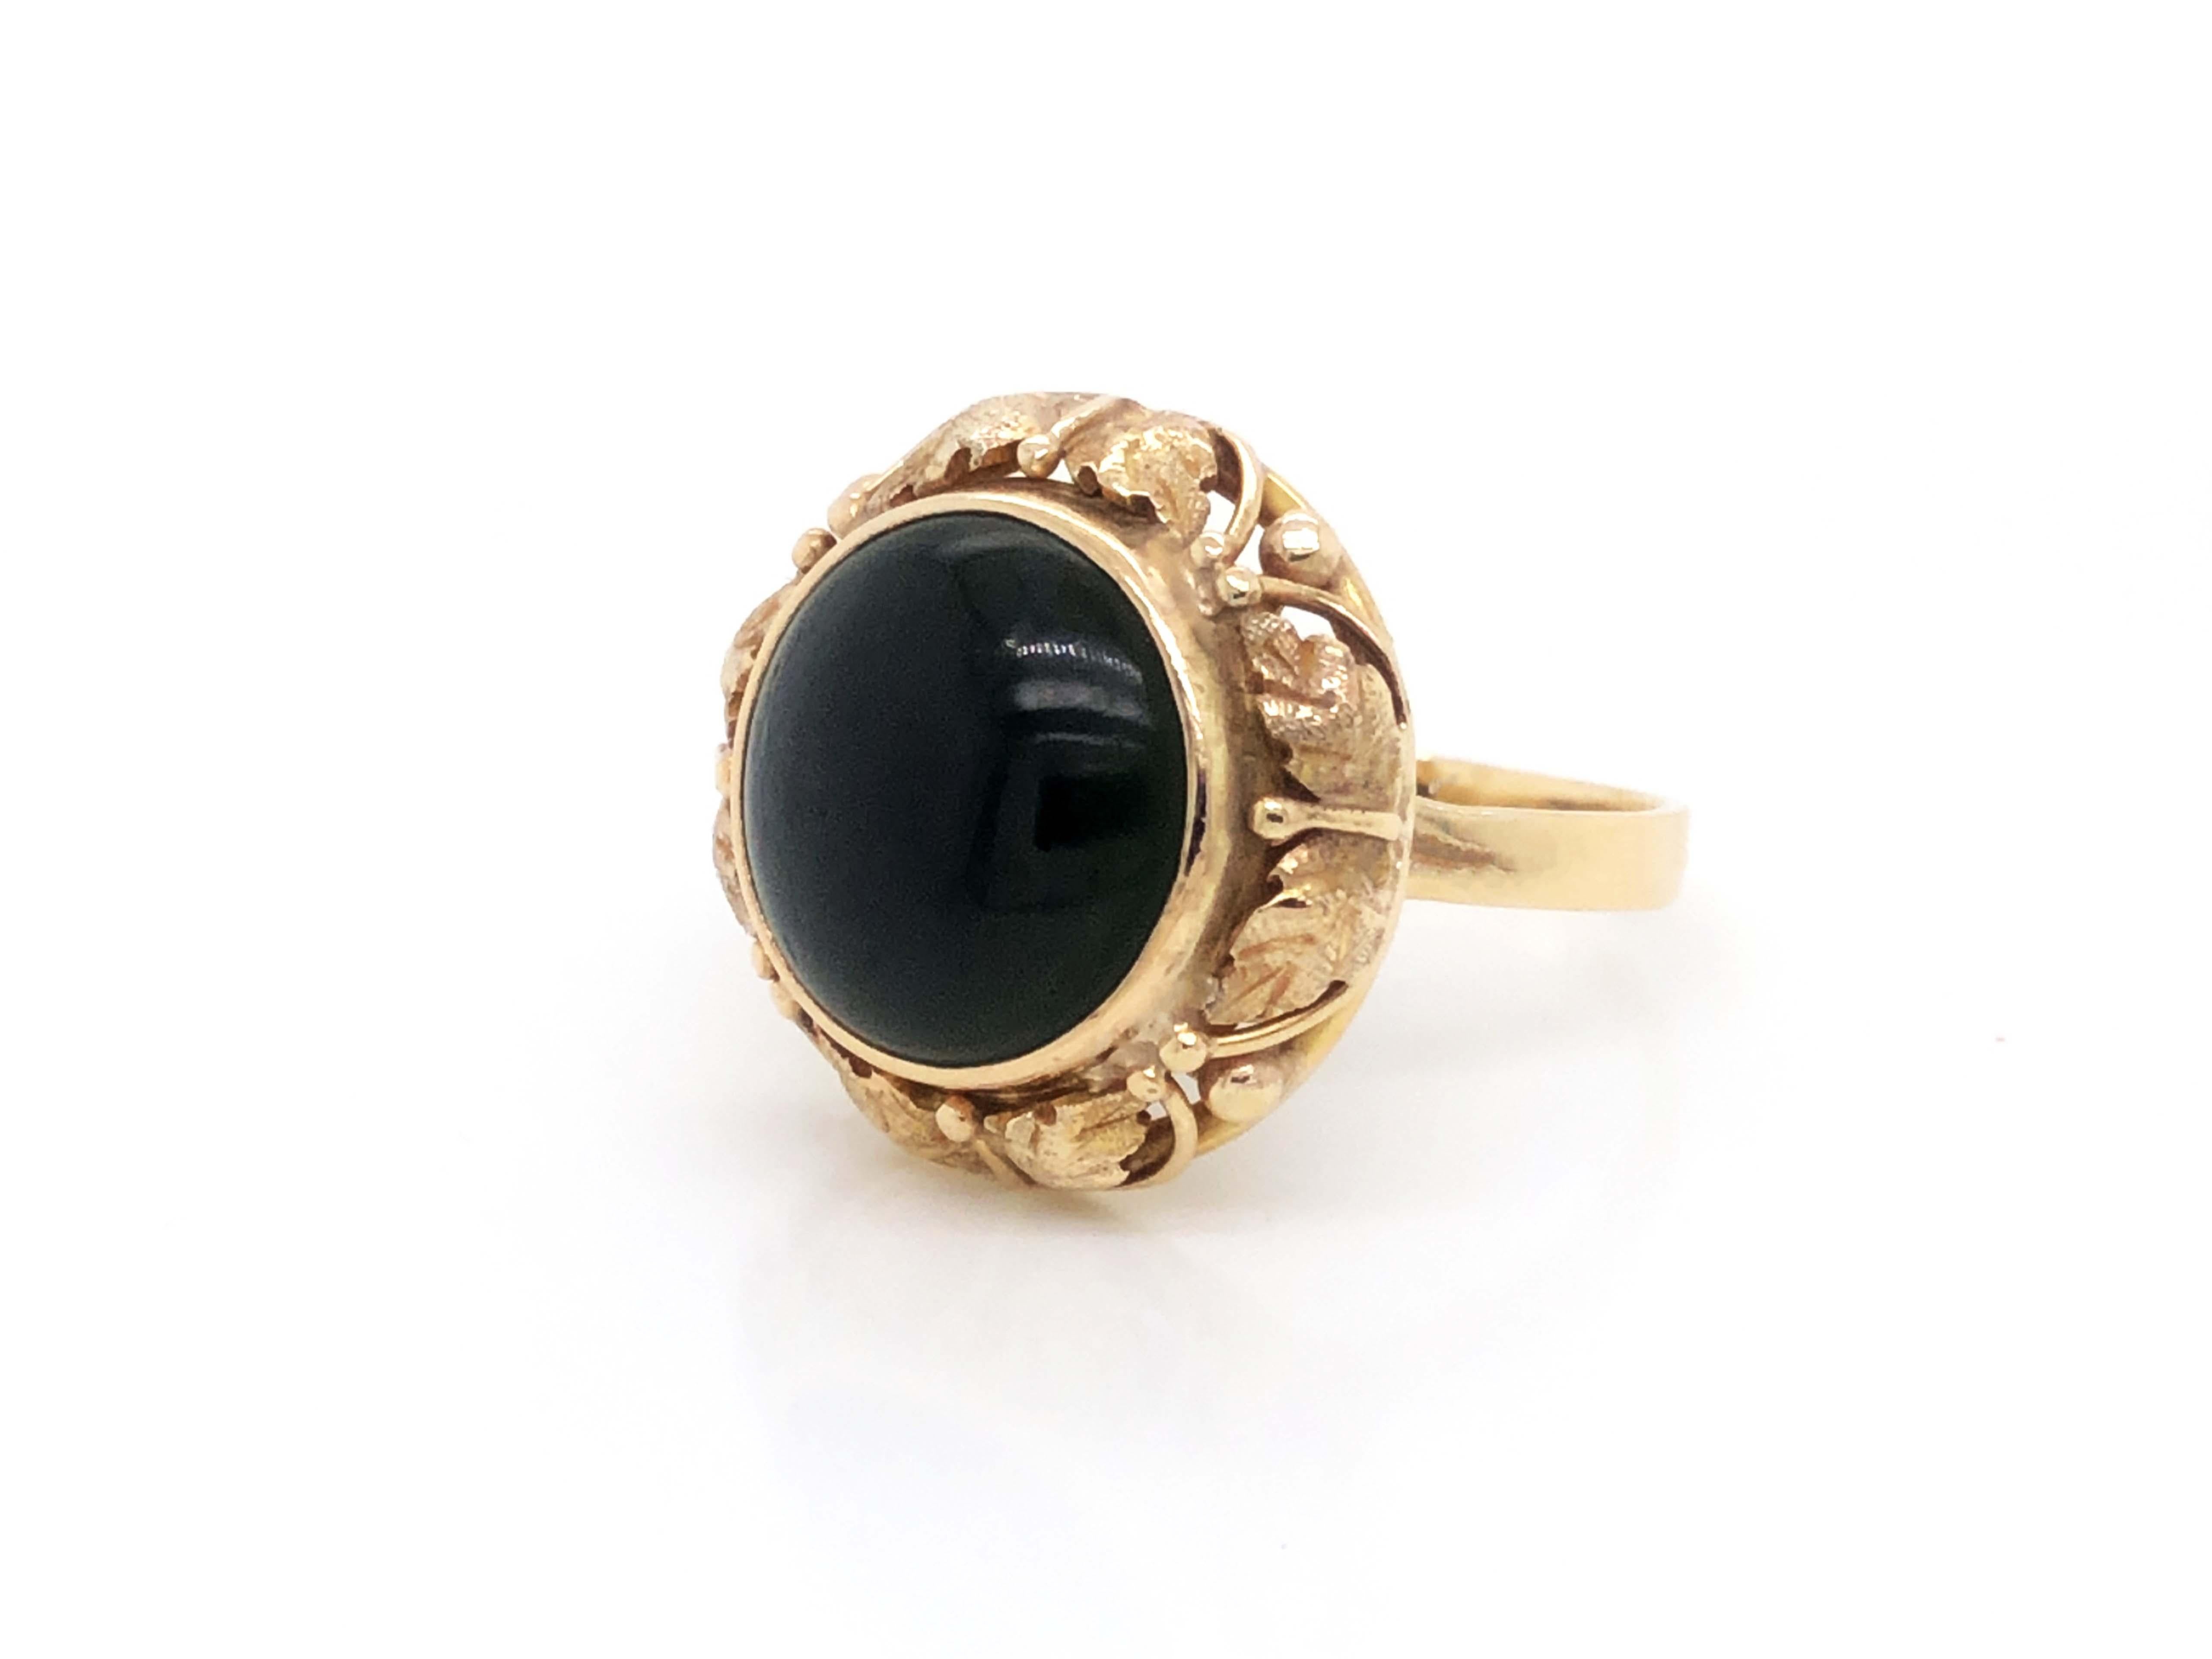 Modern Vintage Round Black Jade Ring with Leaf Design, 14k Yellow Gold